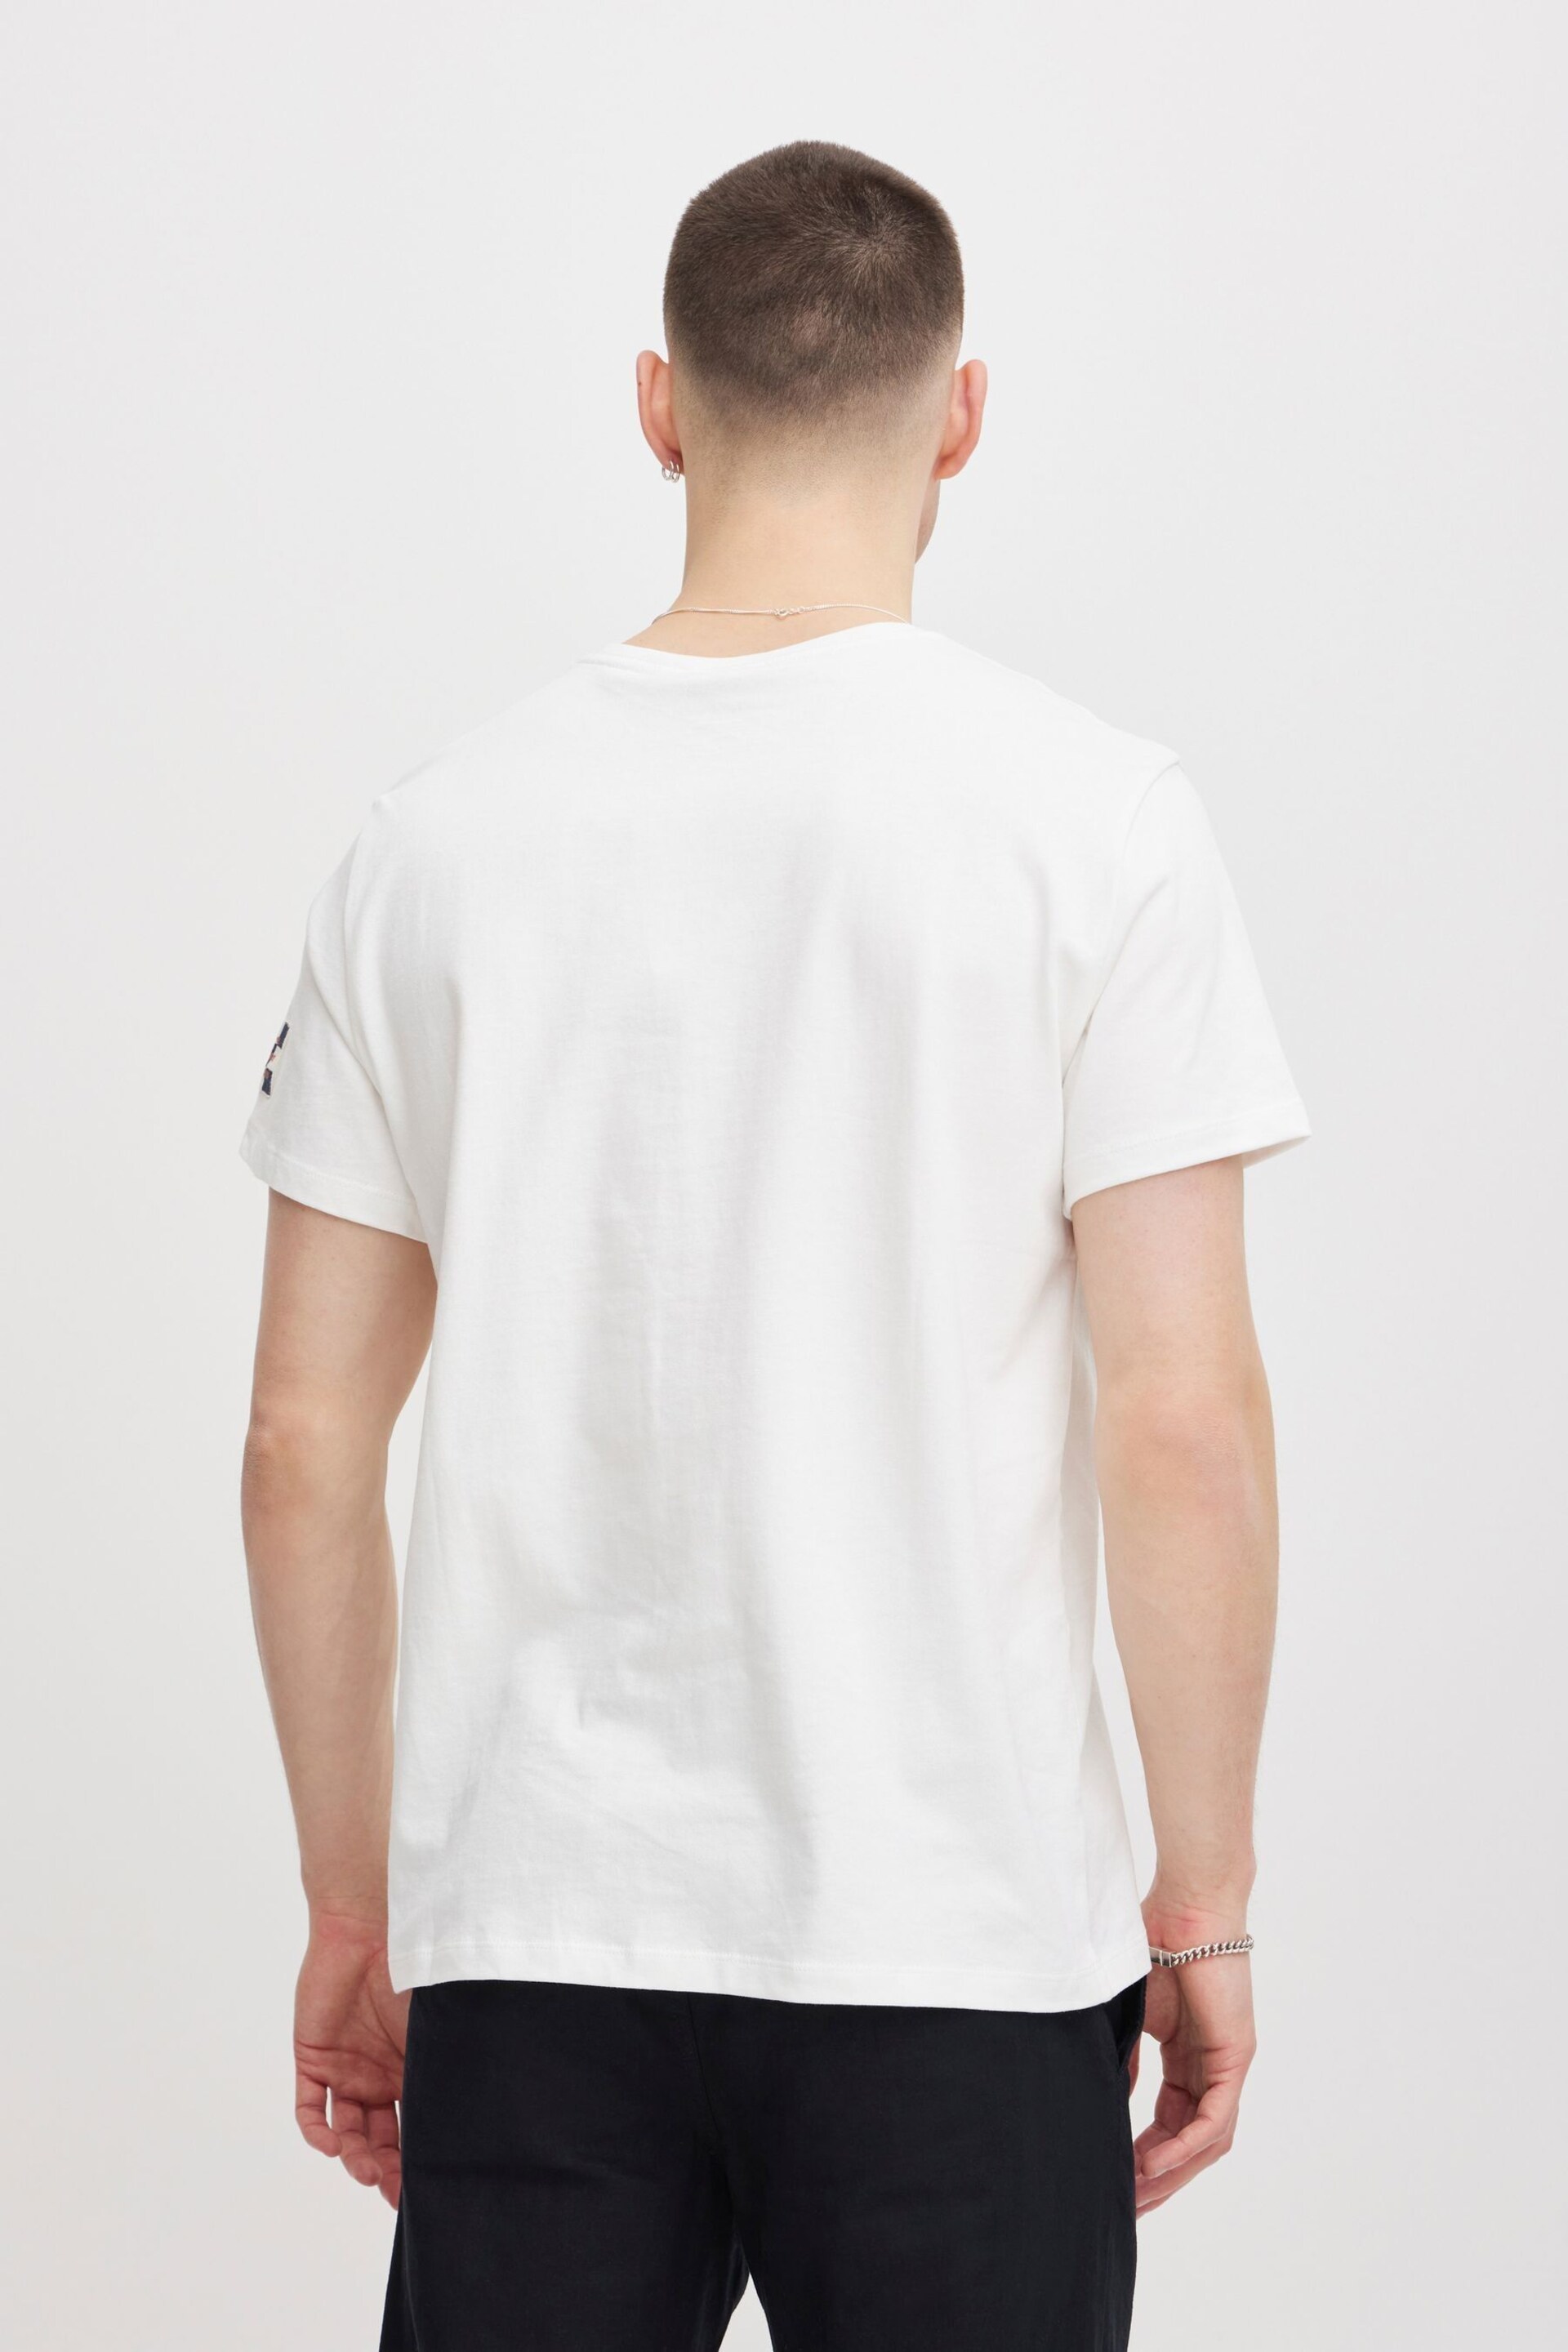 Blend White Printed Short Sleeve T-Shirt - Image 2 of 5